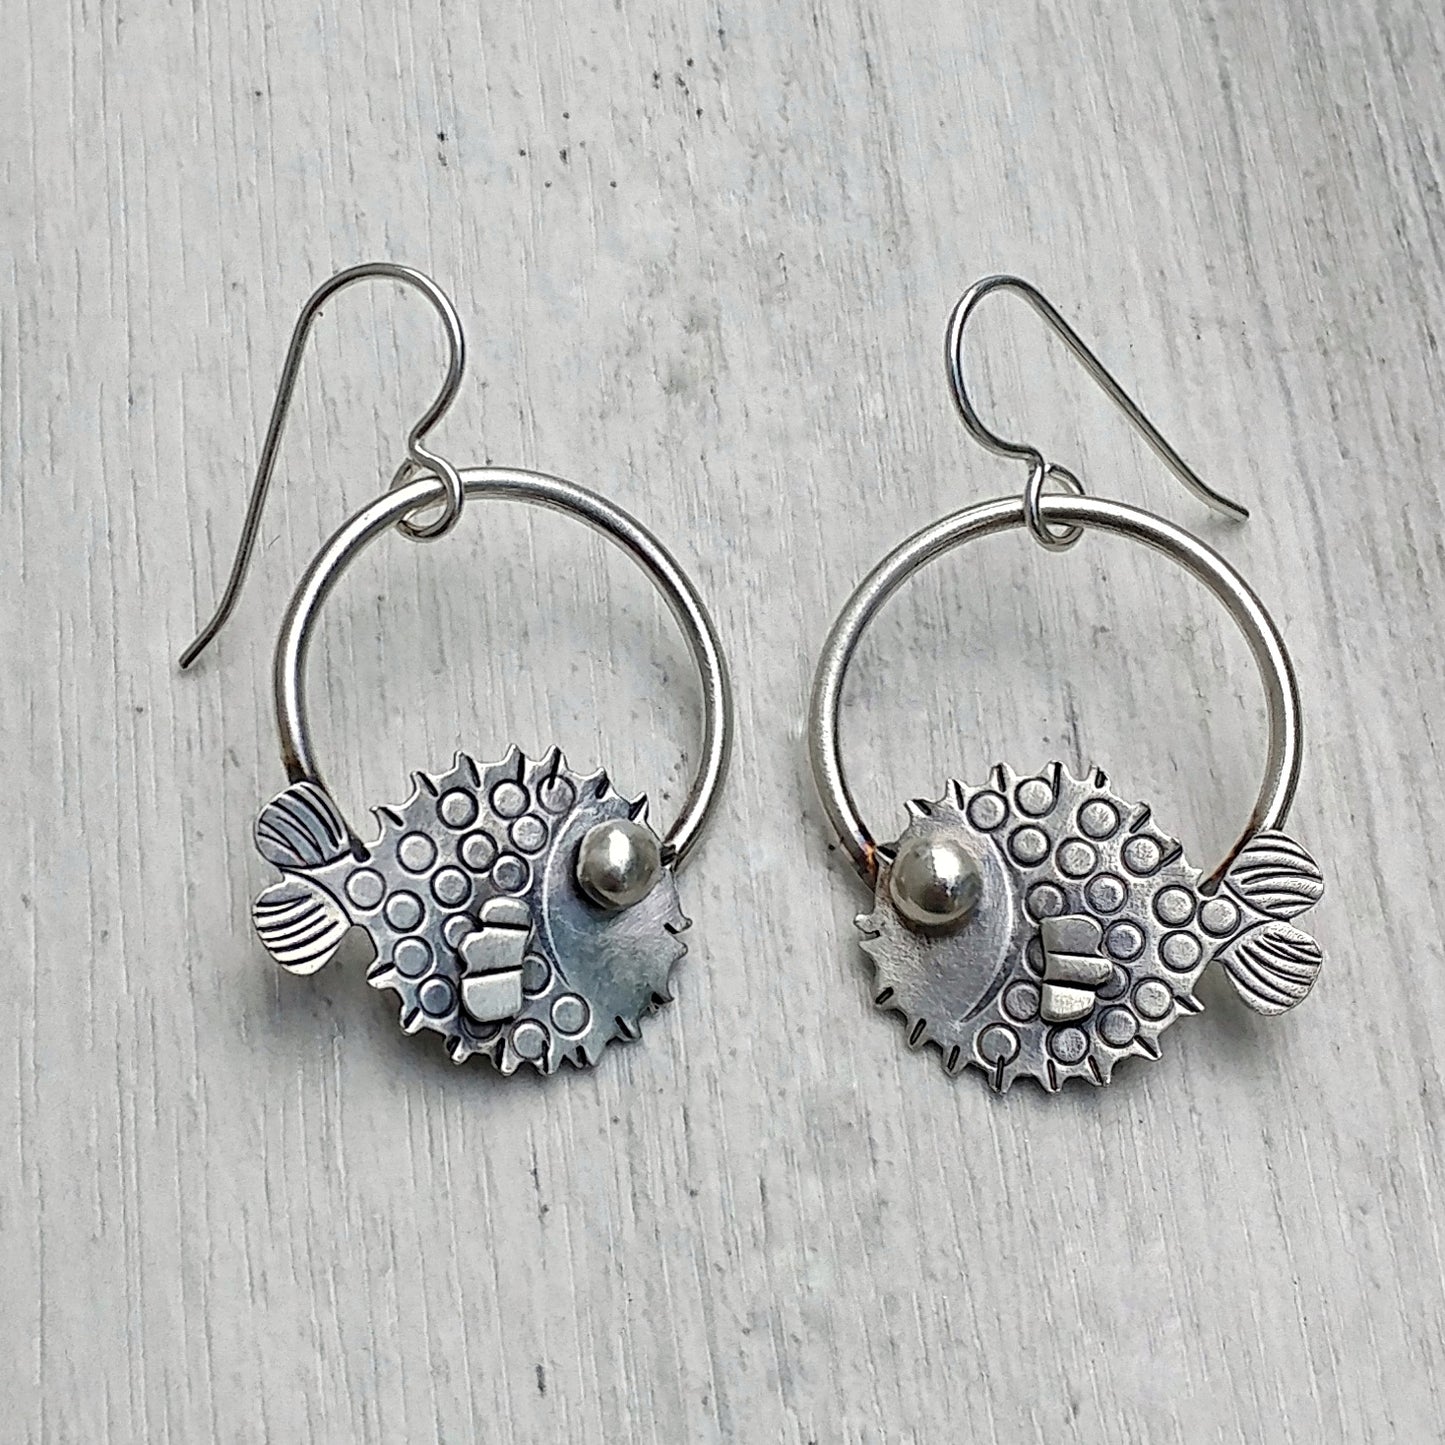 Option for pufferfish earrings